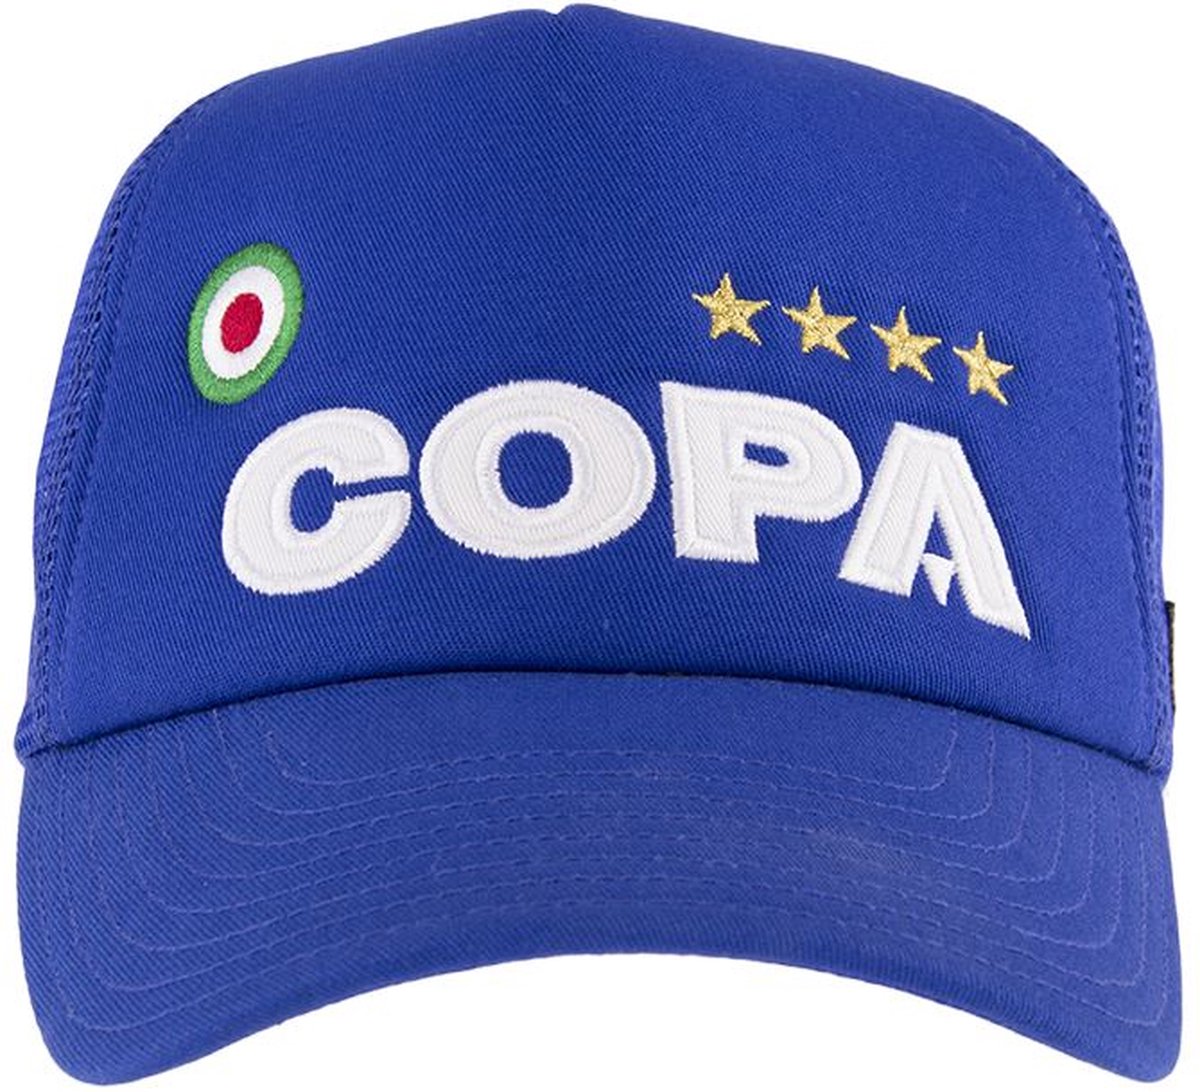 COPA - COPA Campioni Blue Trucker Cap - One size - Blauw